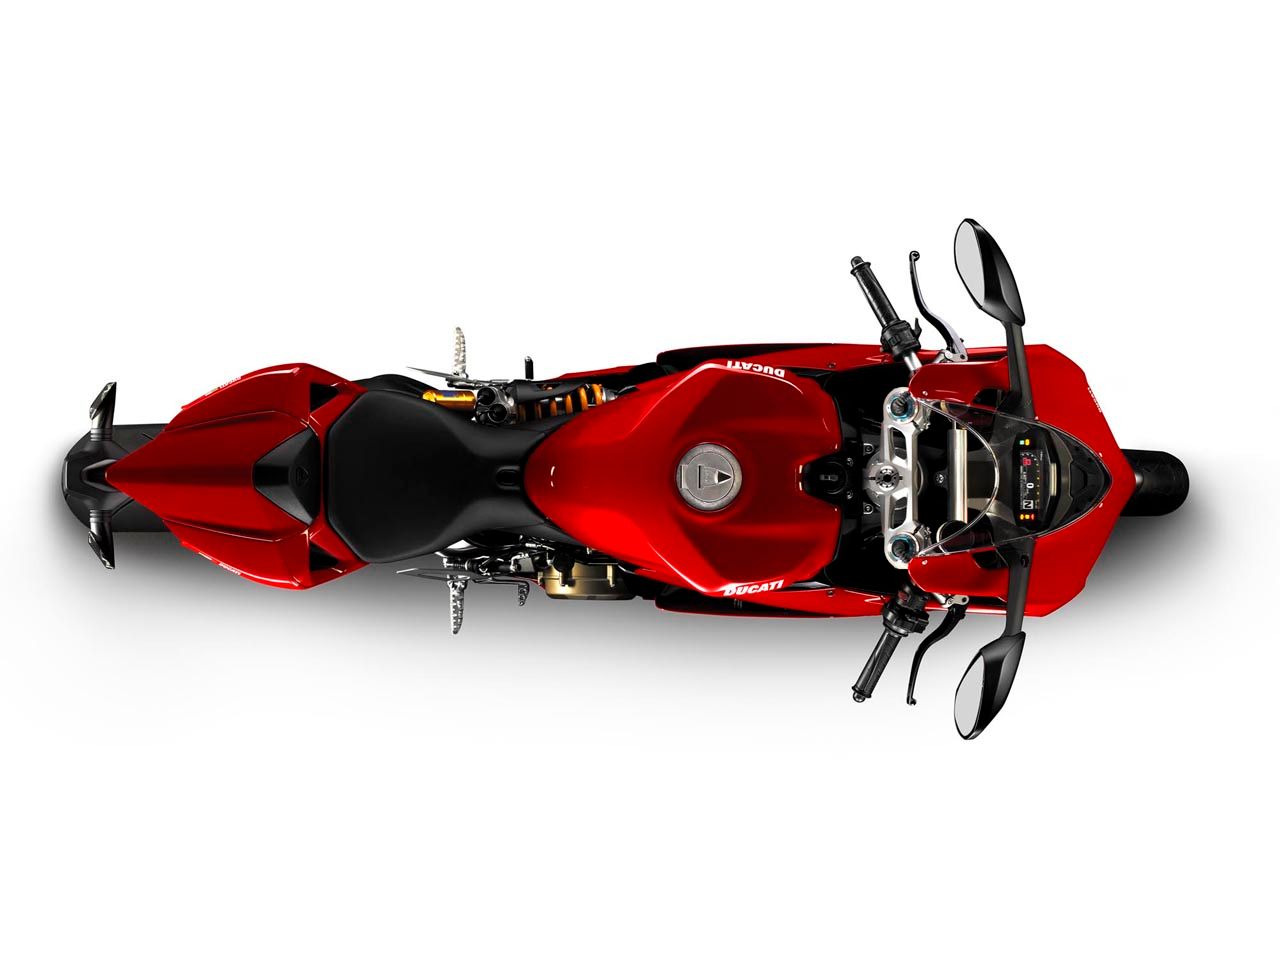 2012 Ducati 1199 Panigale